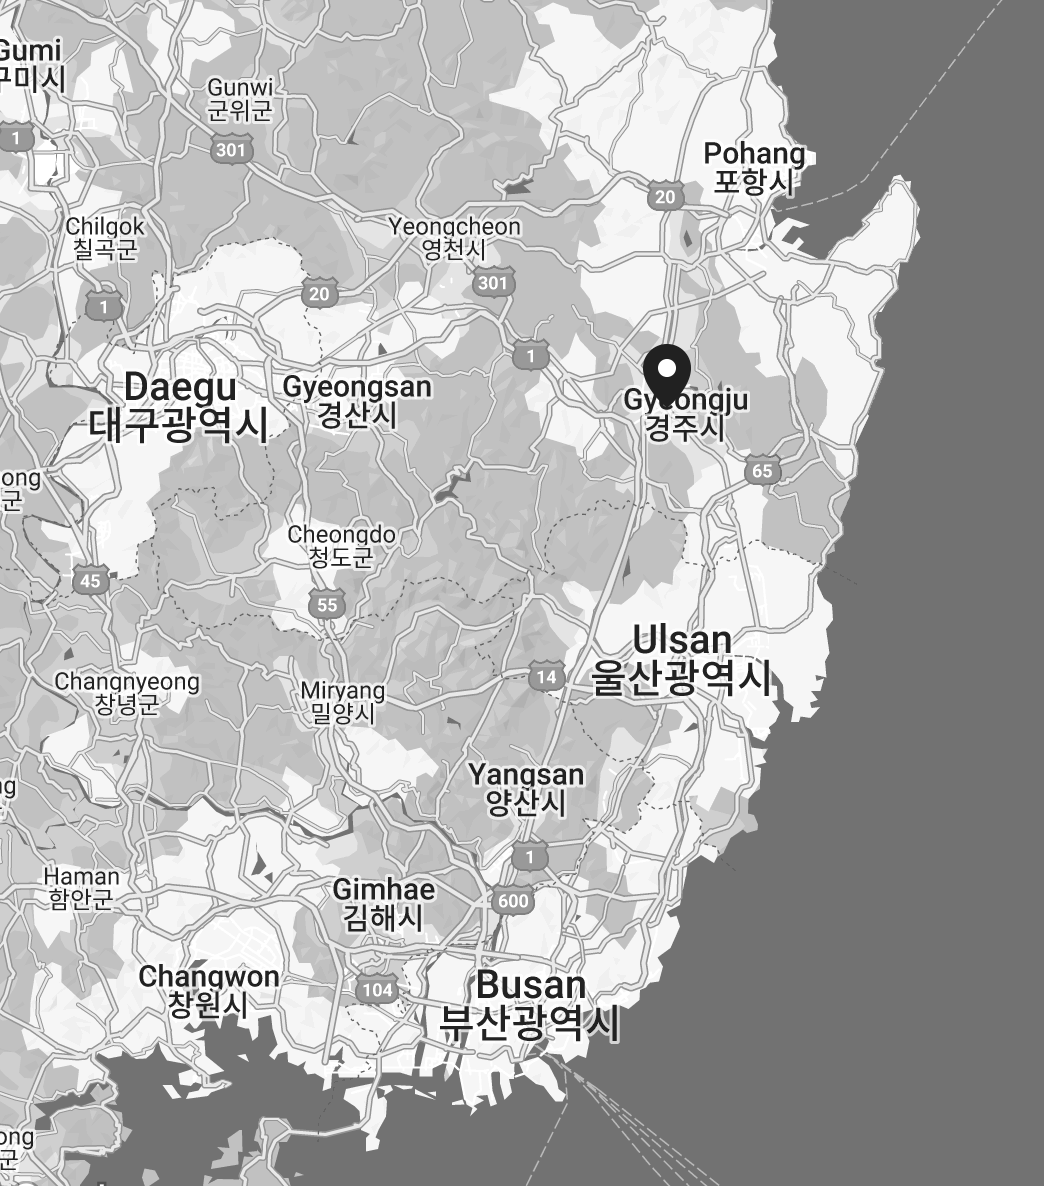 Location of Gyeongju